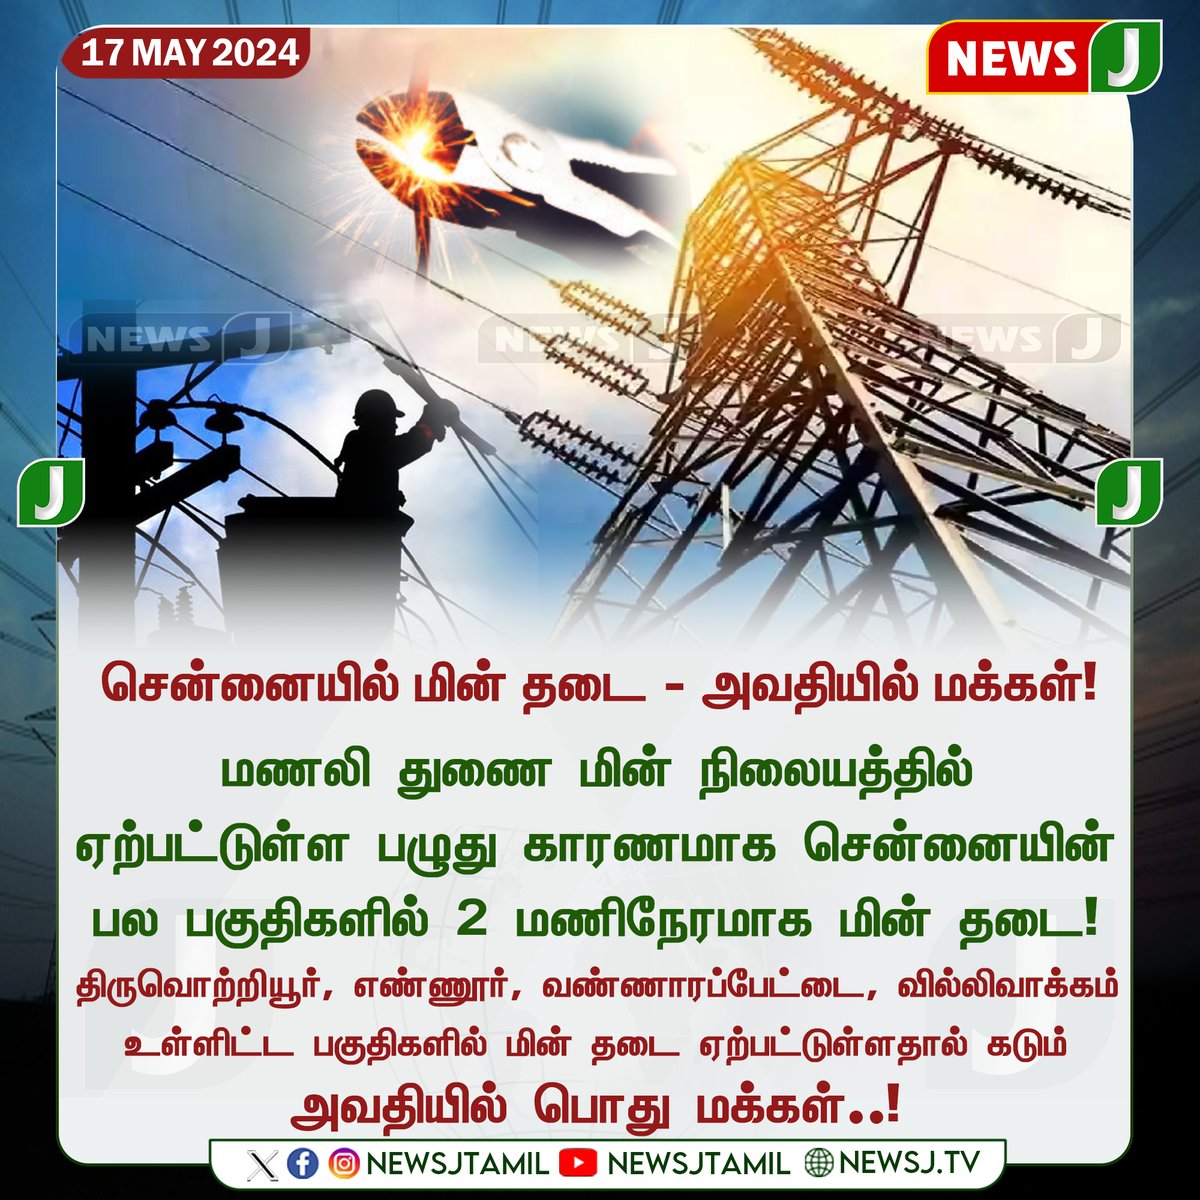 #BREAKING || சென்னையில் மின் தடை - அவதியில் மக்கள்..!

#powercut #chennai #summerseason #heatwaves #poweroff #dmkfails #mkstalin #manali #ennore #villivakkam #Thiruvetriyur #newsj